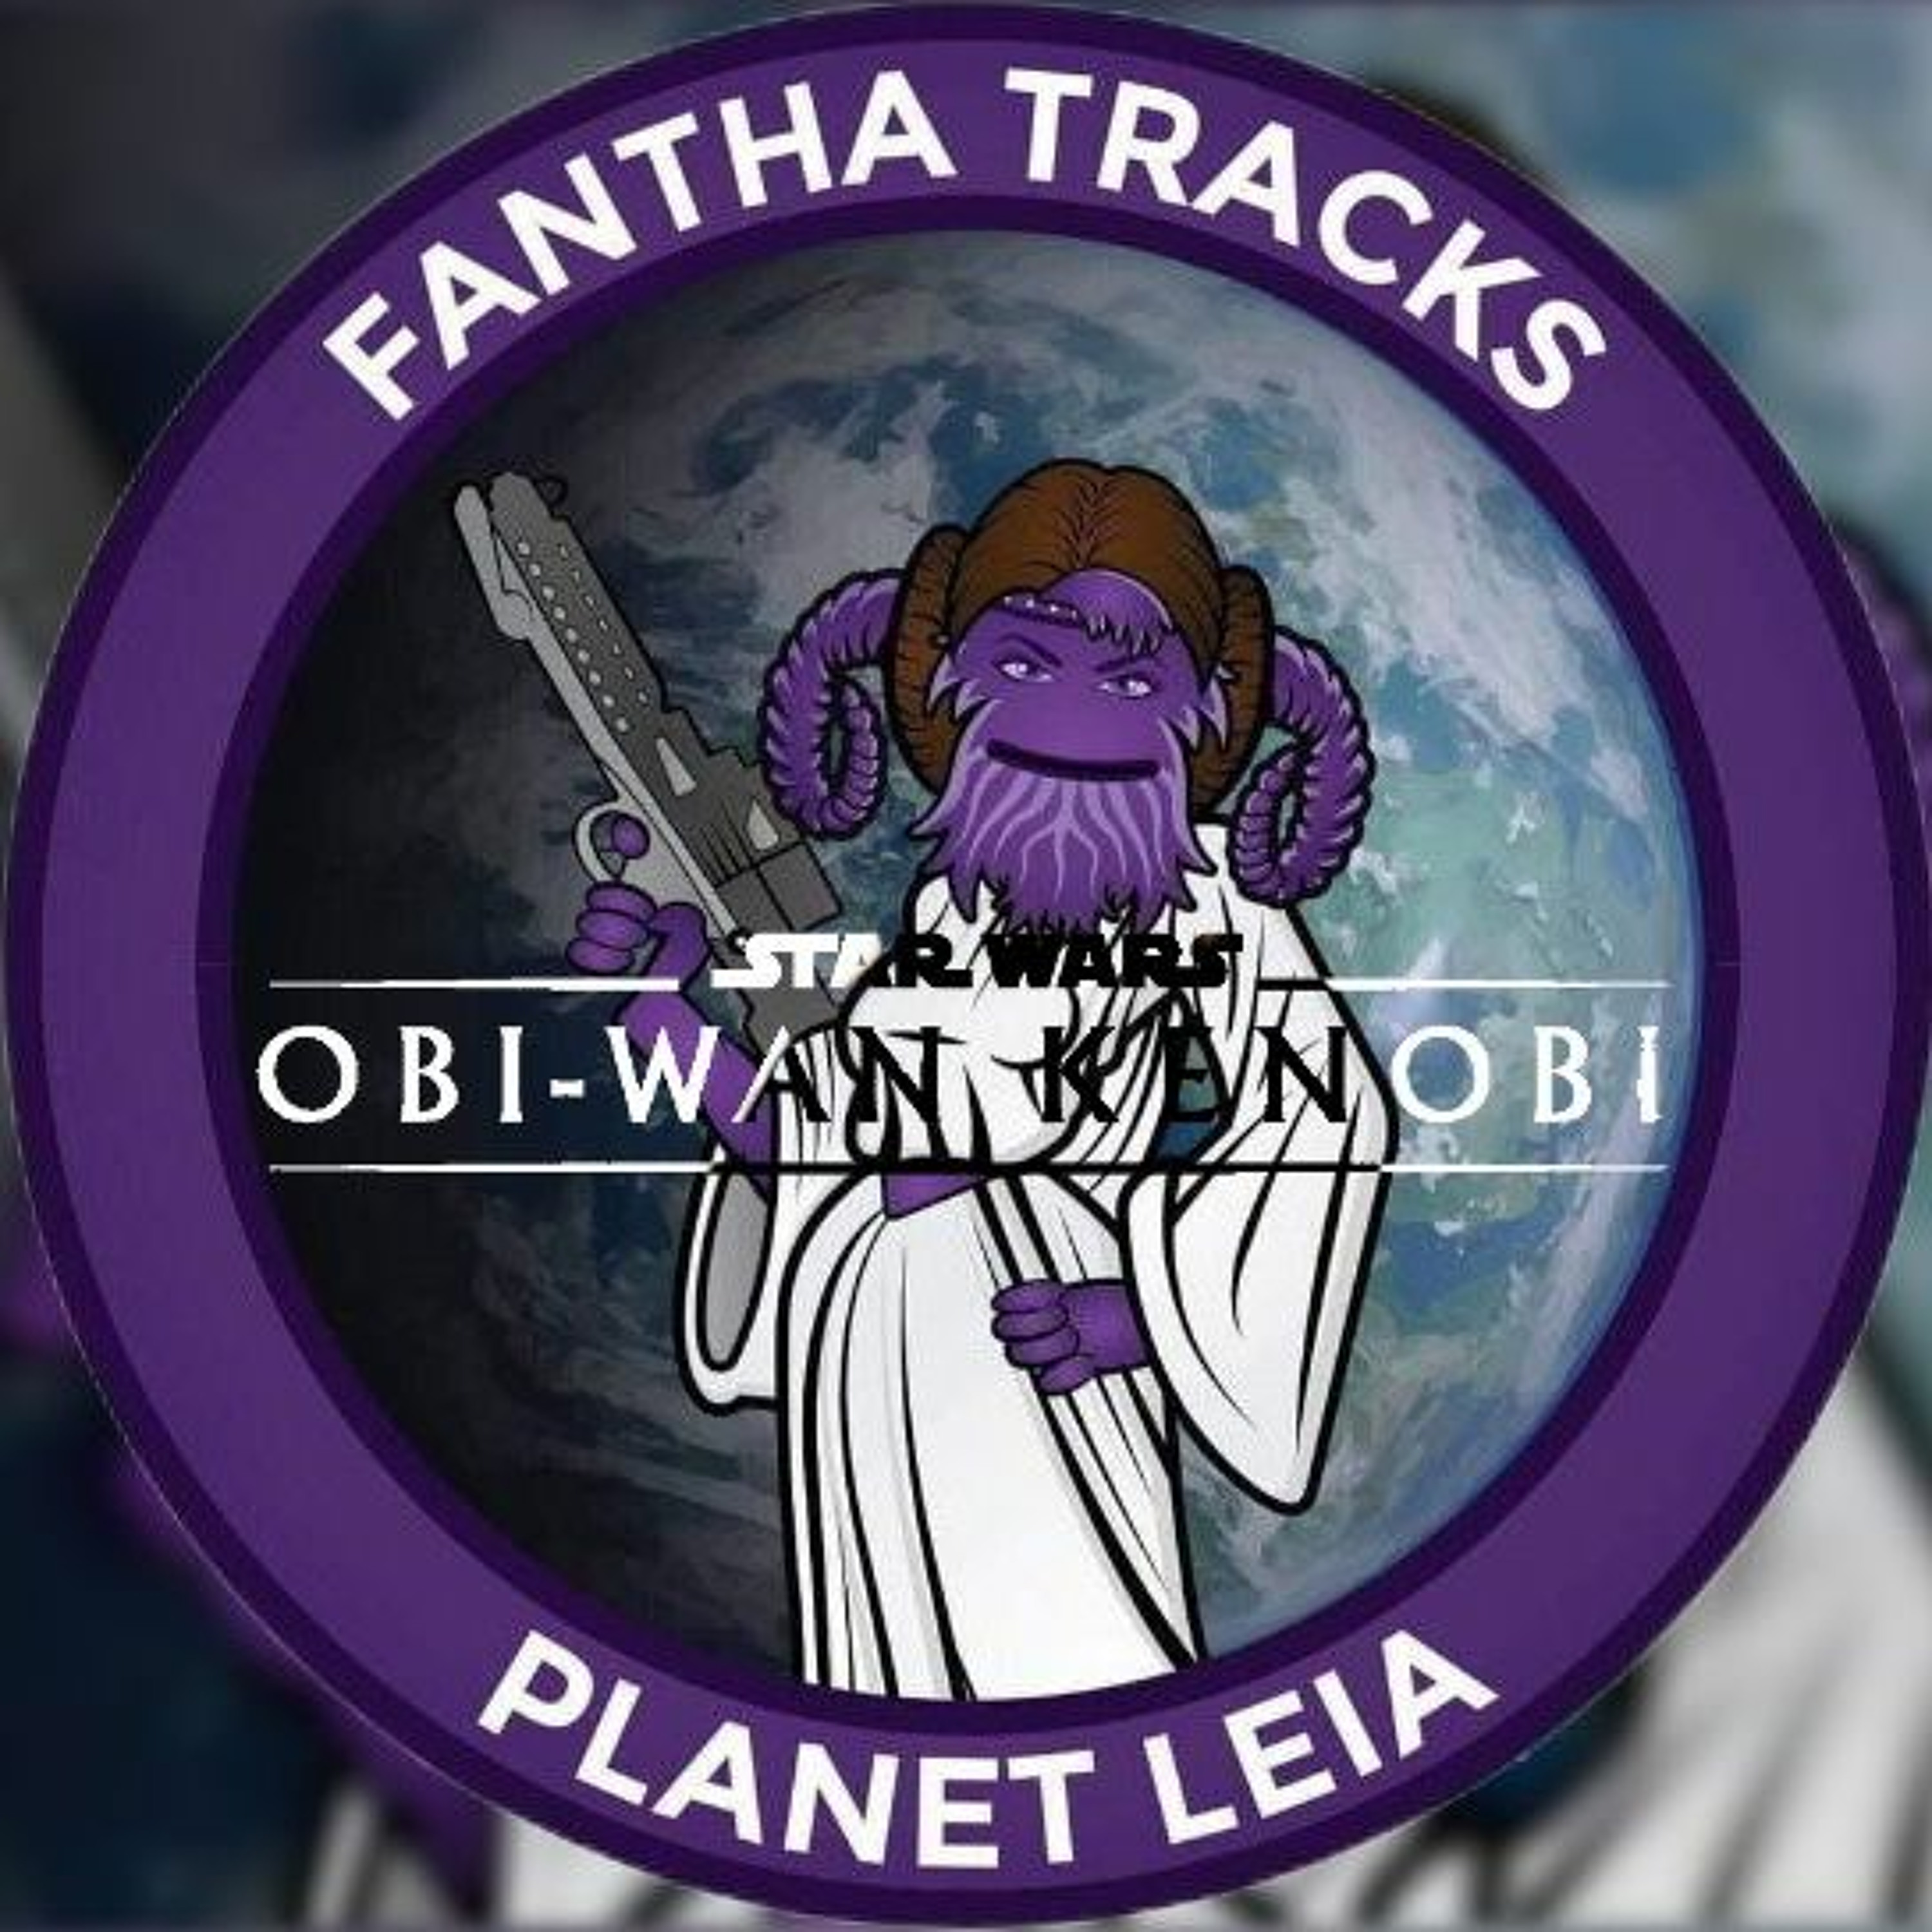 Planet Leia Rebel Briefing: With guest Vivien Lyra Blair